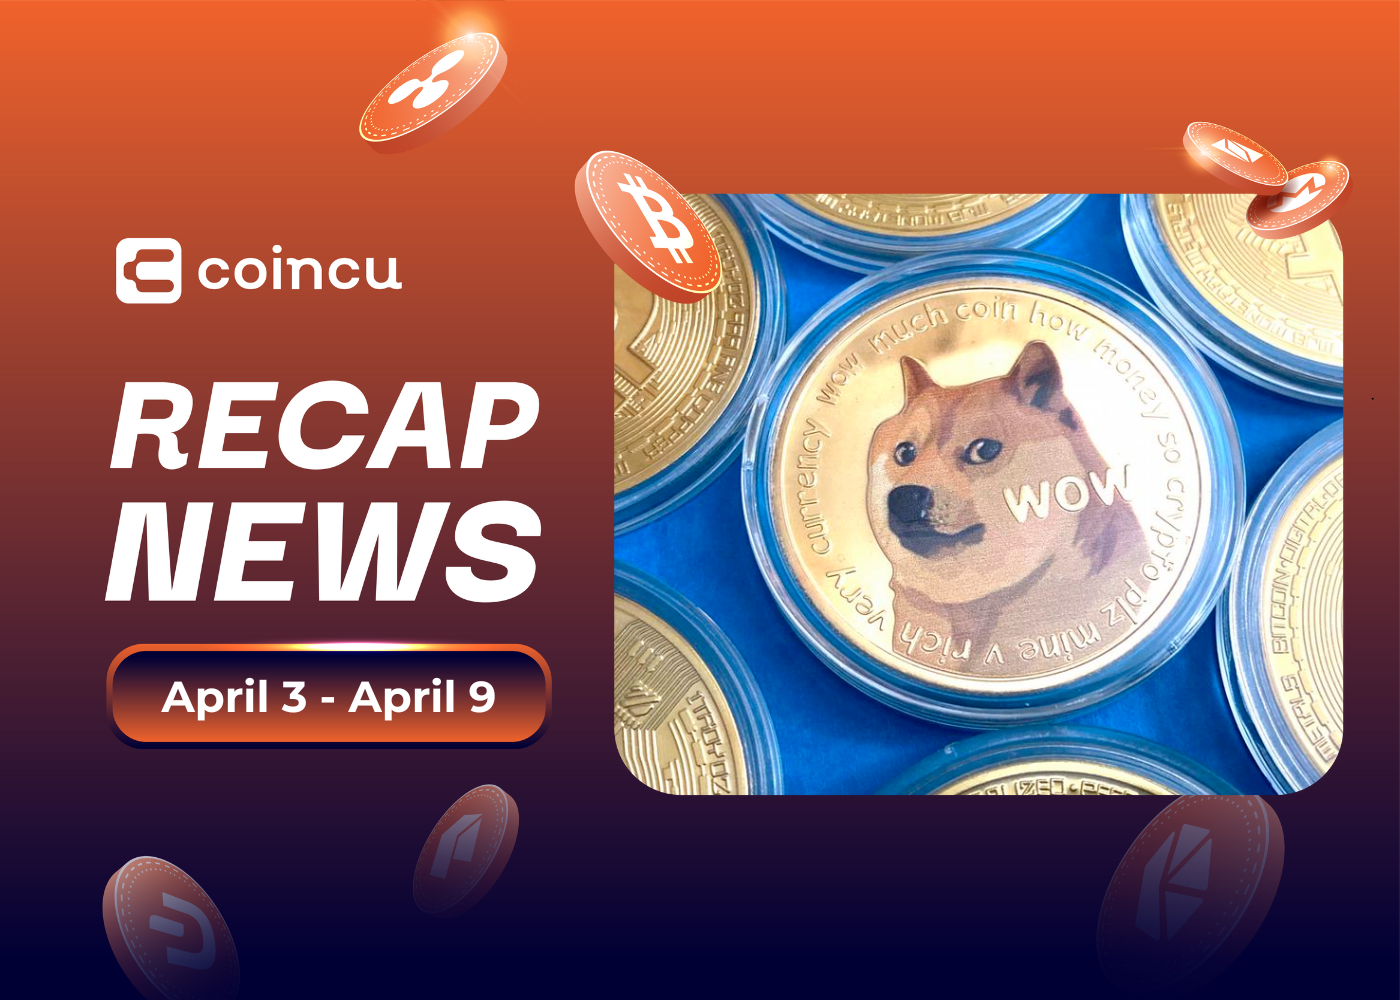 Weekly Top Crypto News (April 3 - April 9)